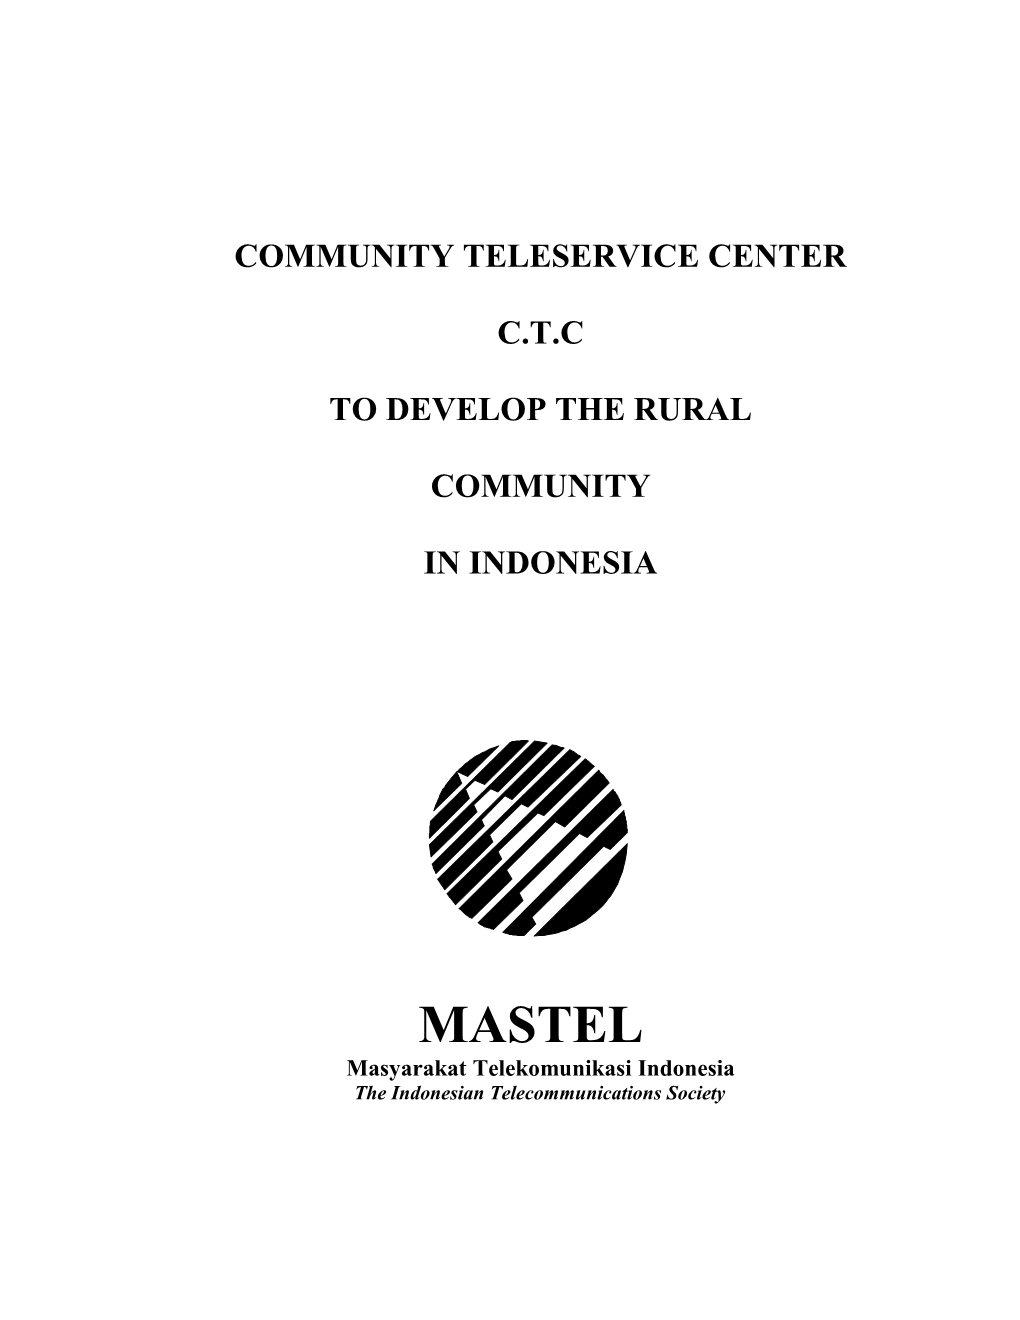 Community Teleservice Center